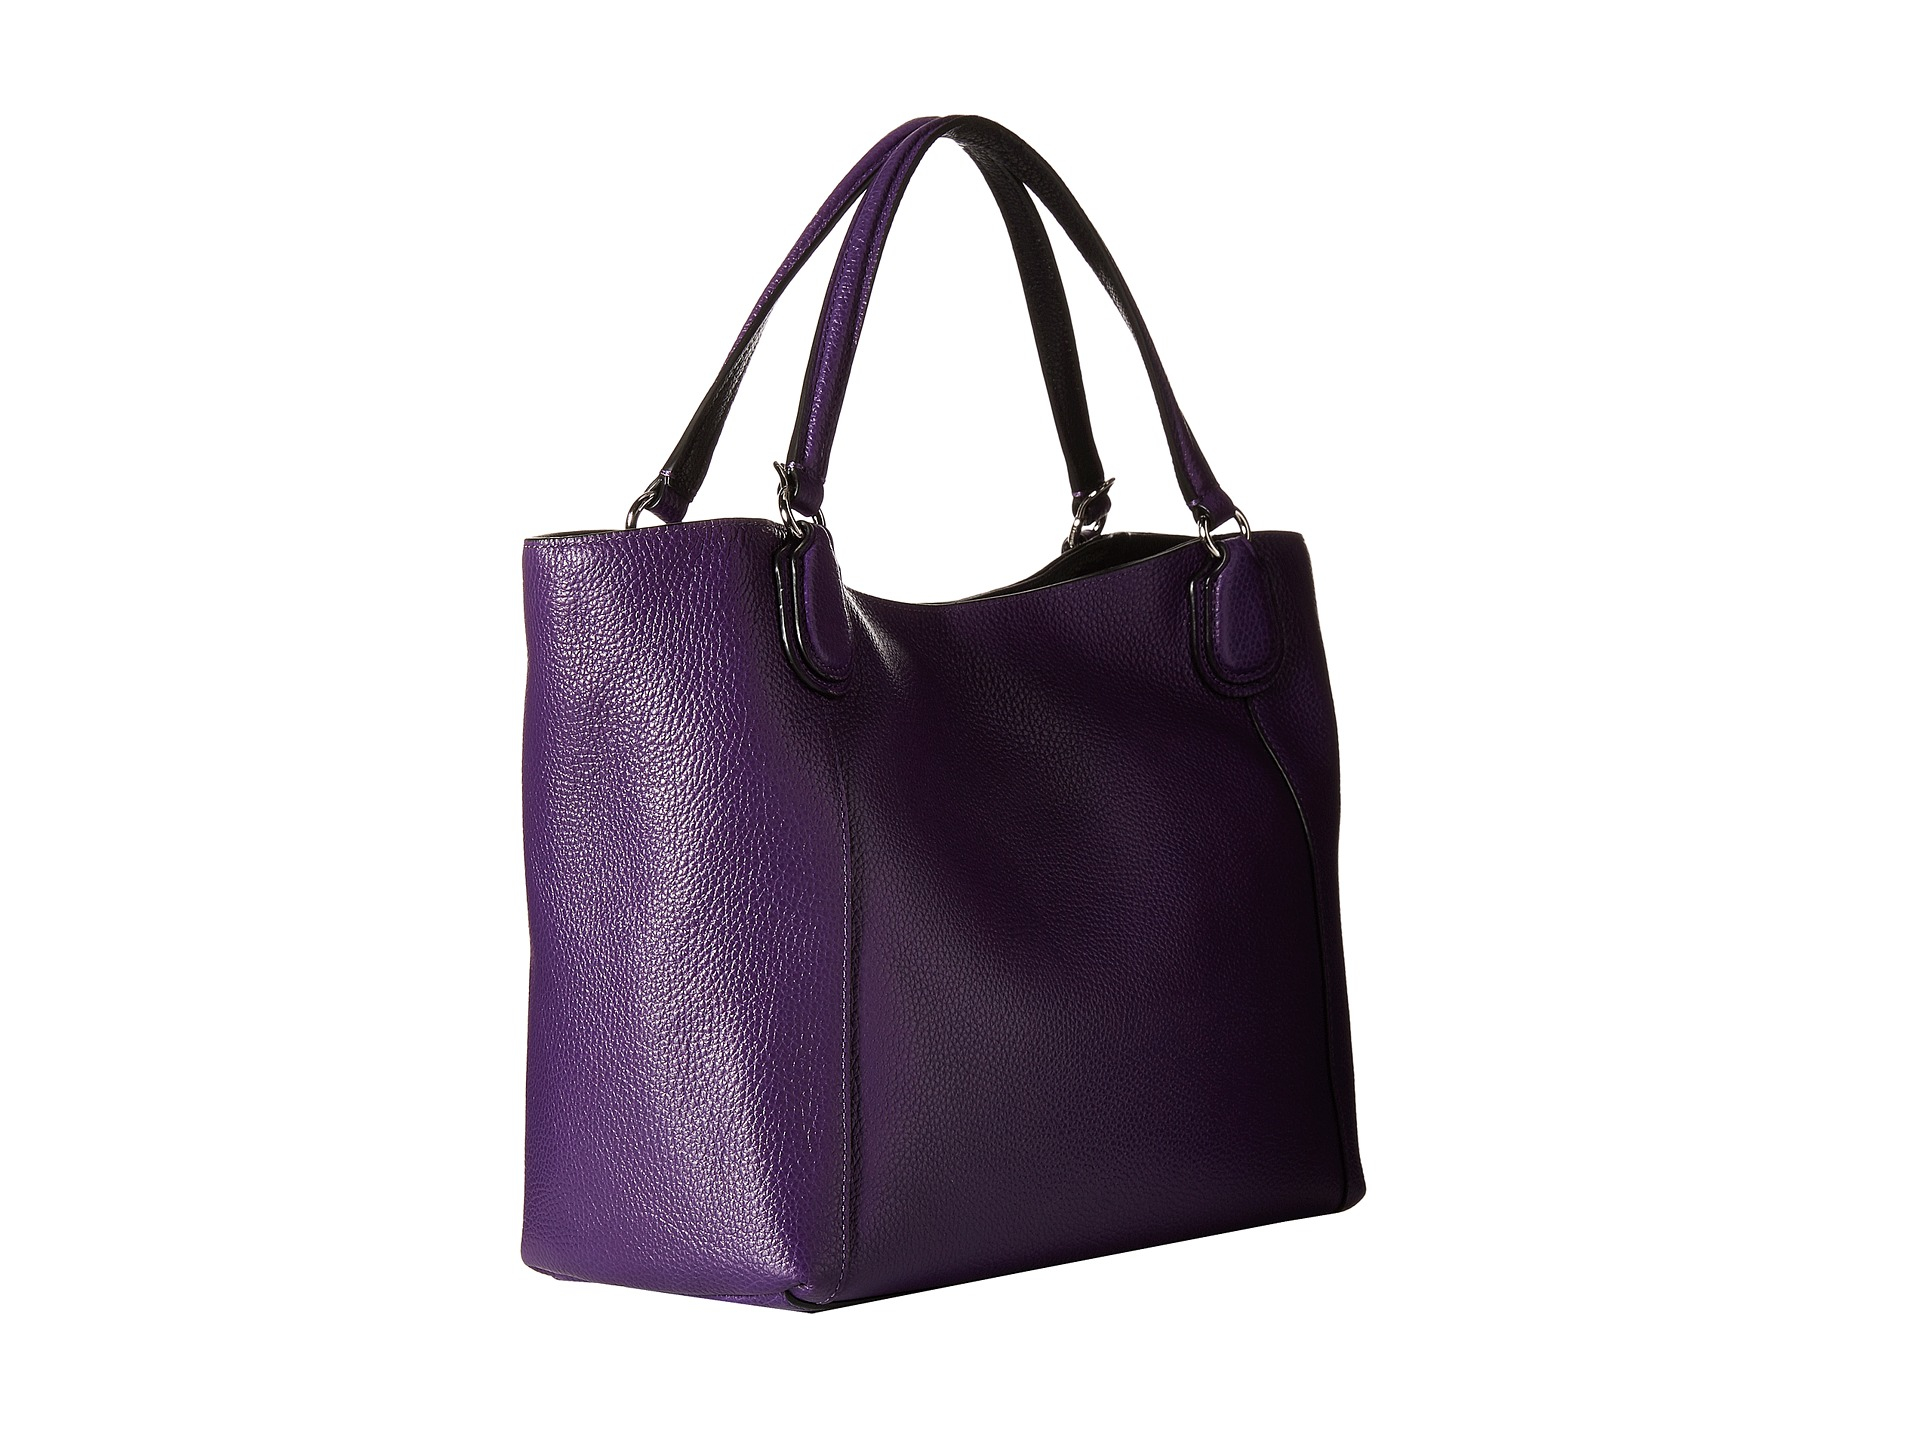 Purple coach purse - Women's handbags